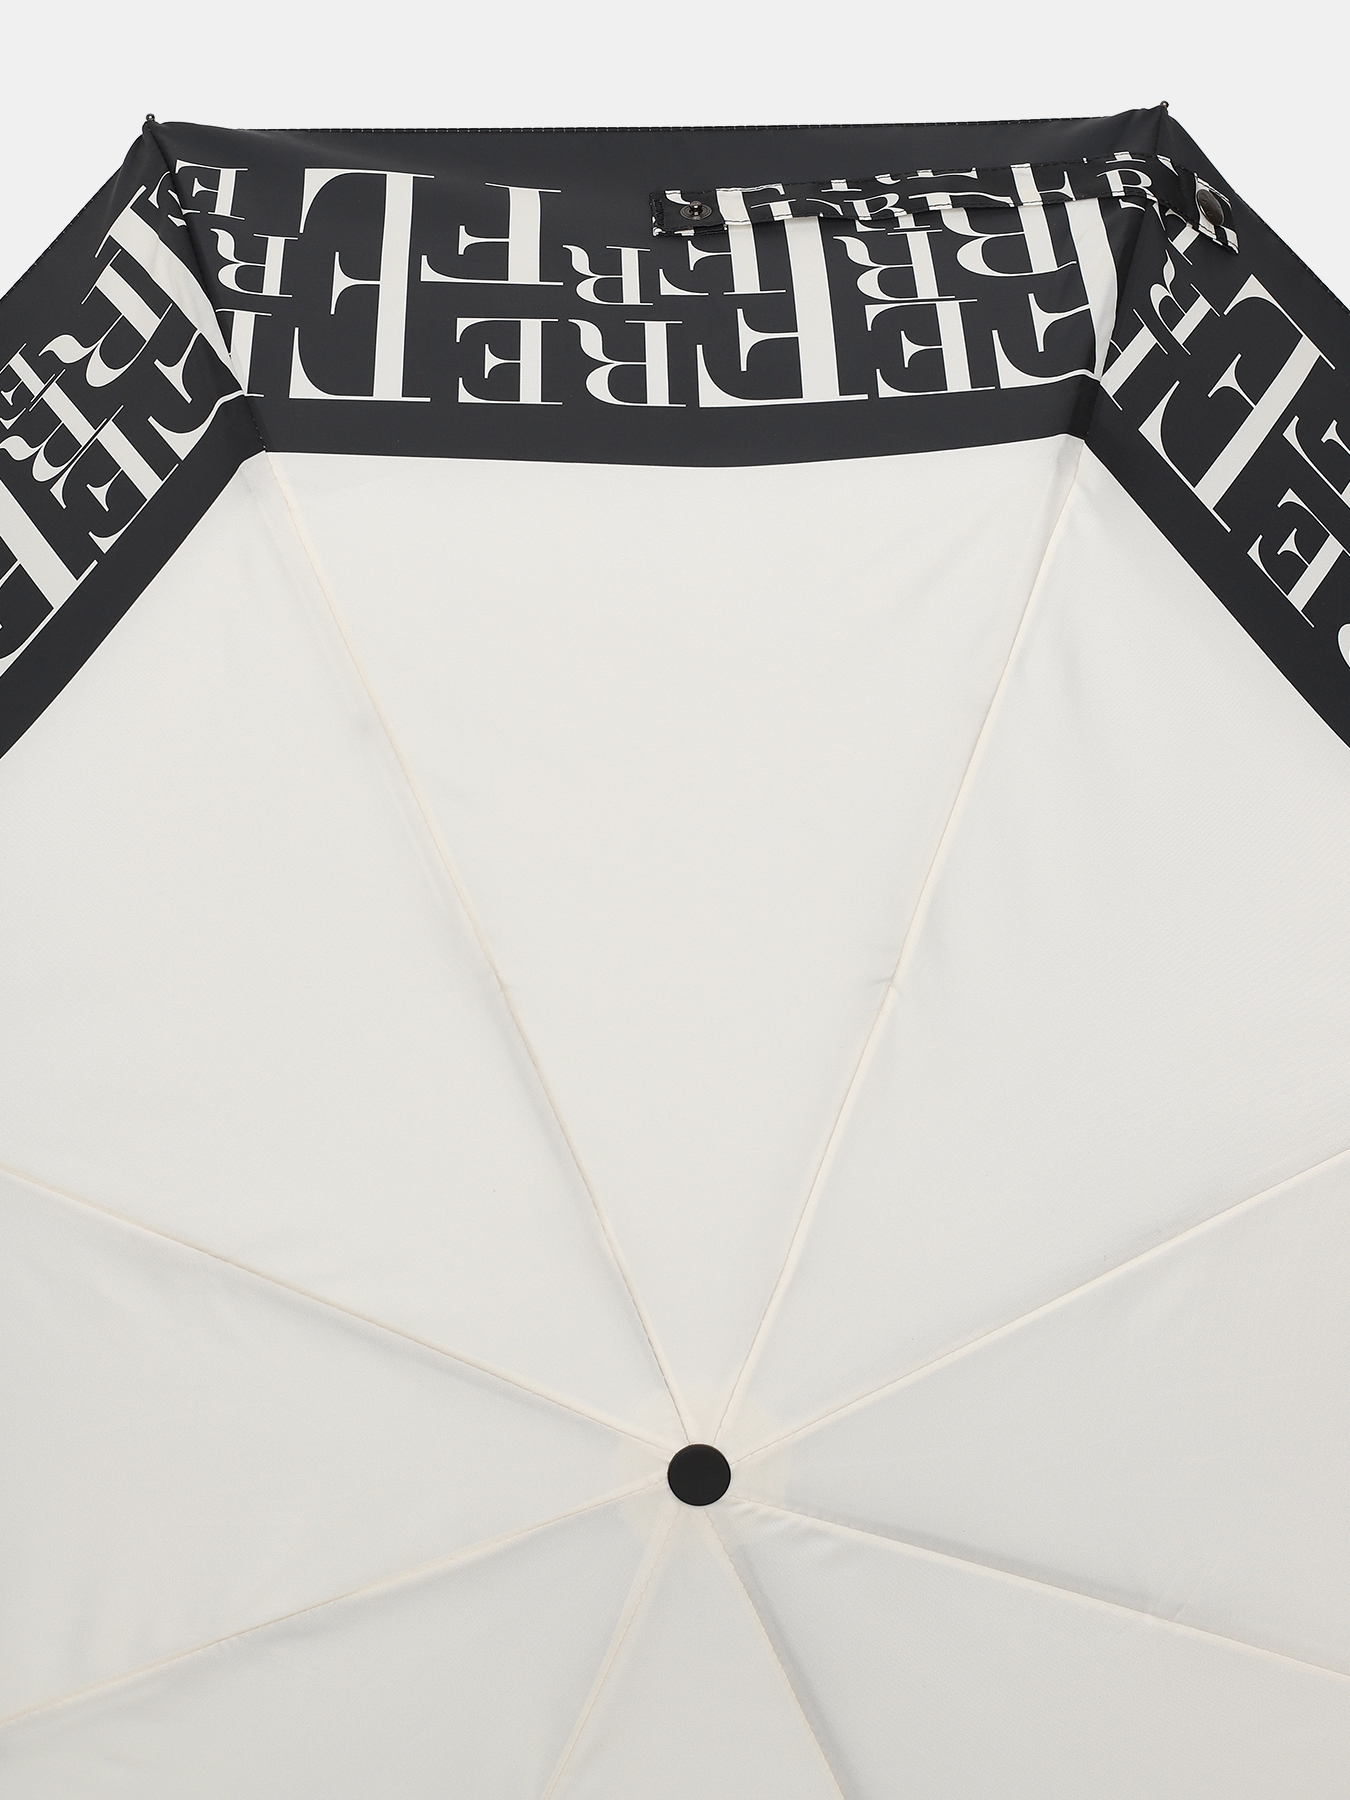 Ferre Milano Складной зонт 389143-185 Фото 5